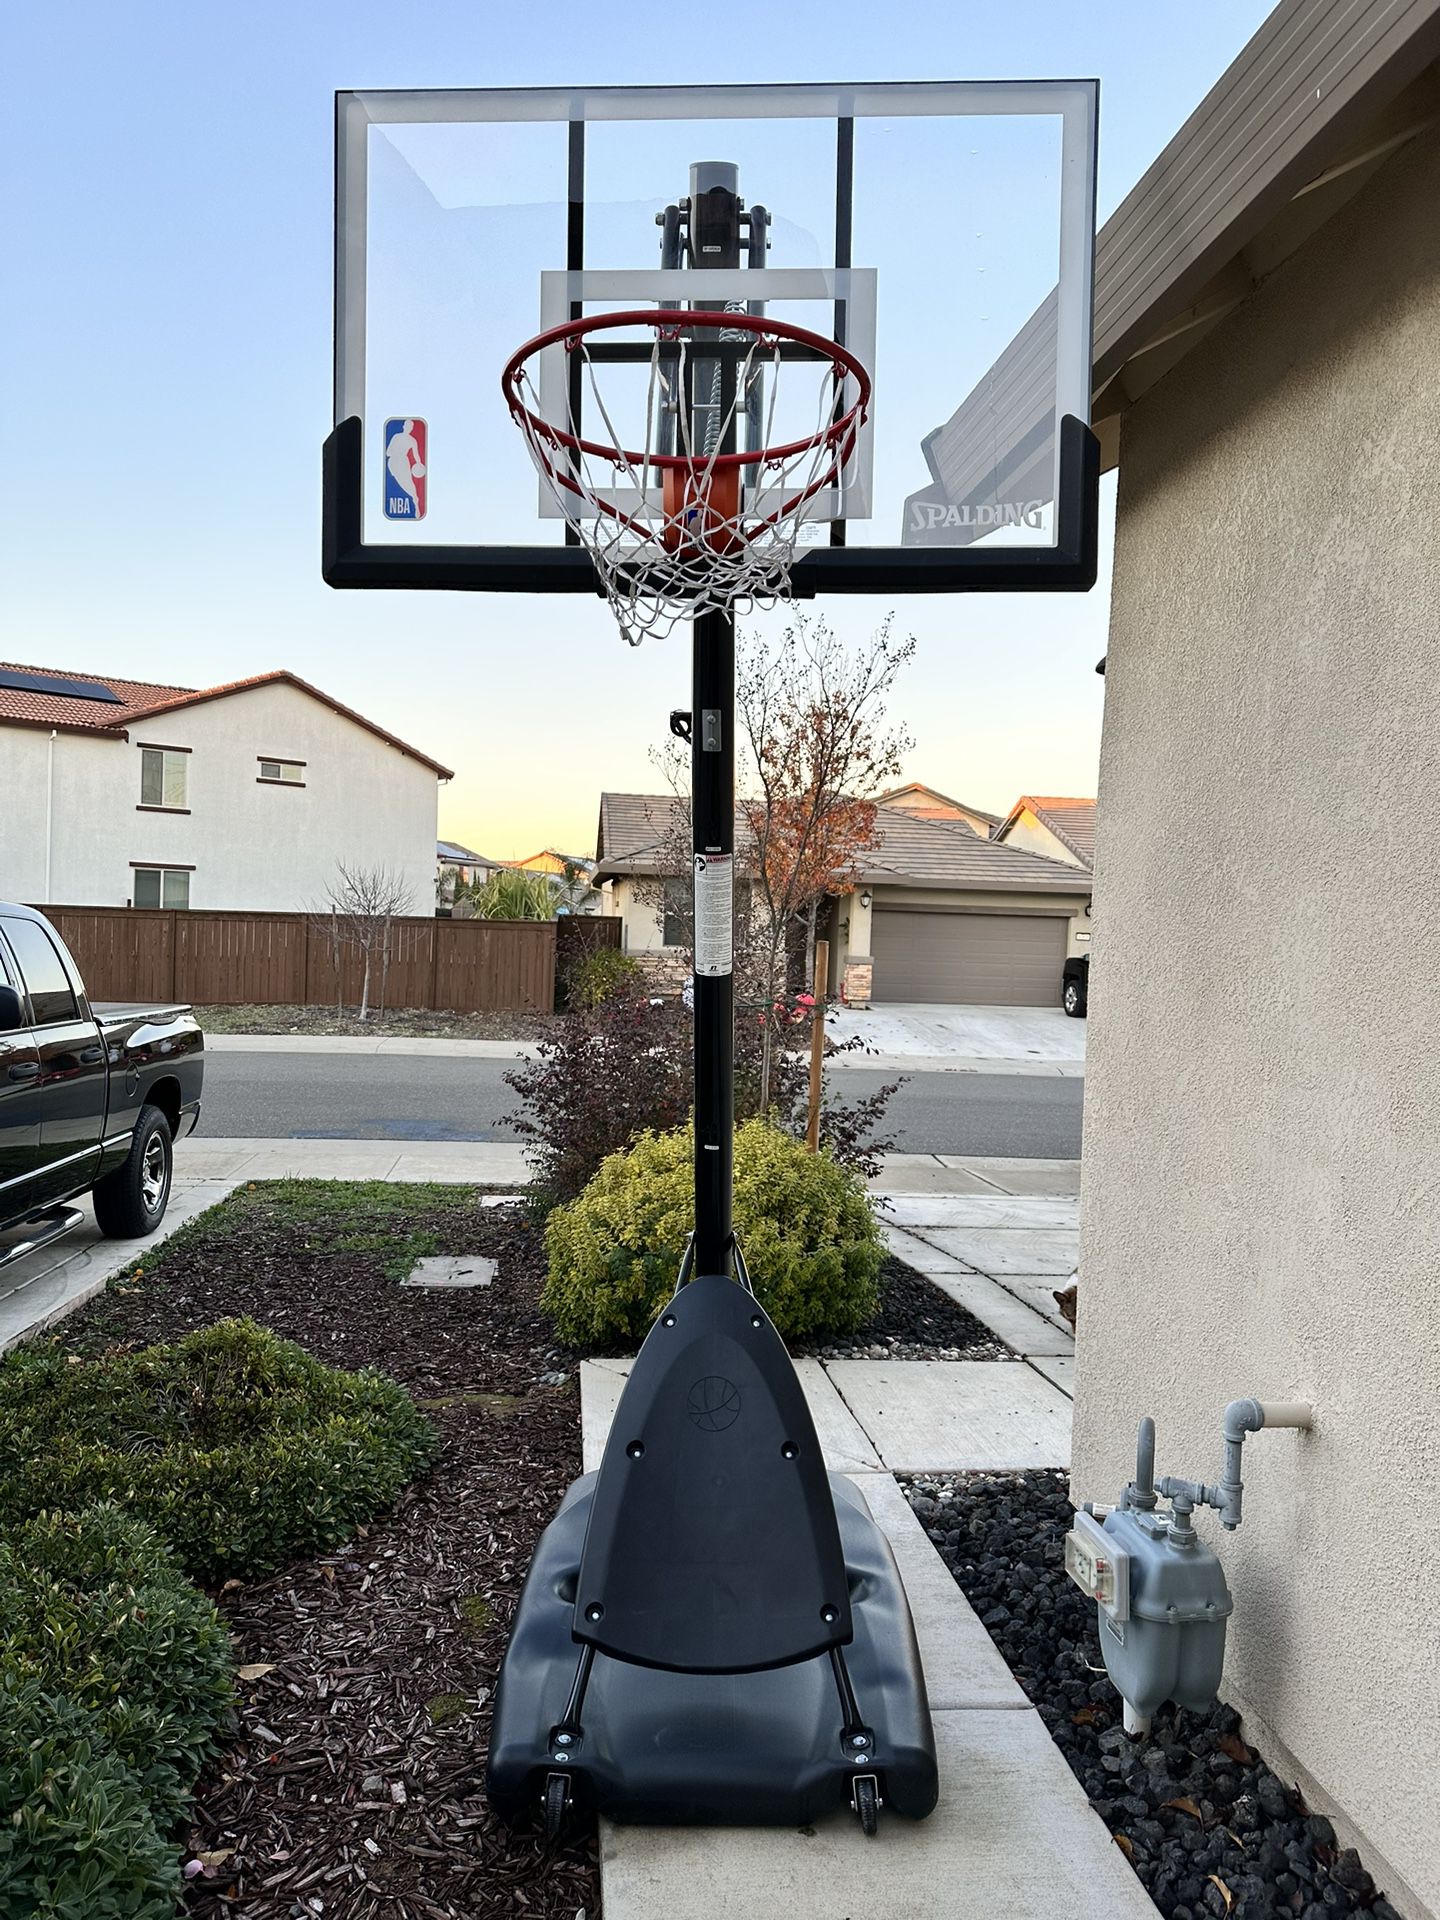 Spalding Adjustable Height Basketball Hoop